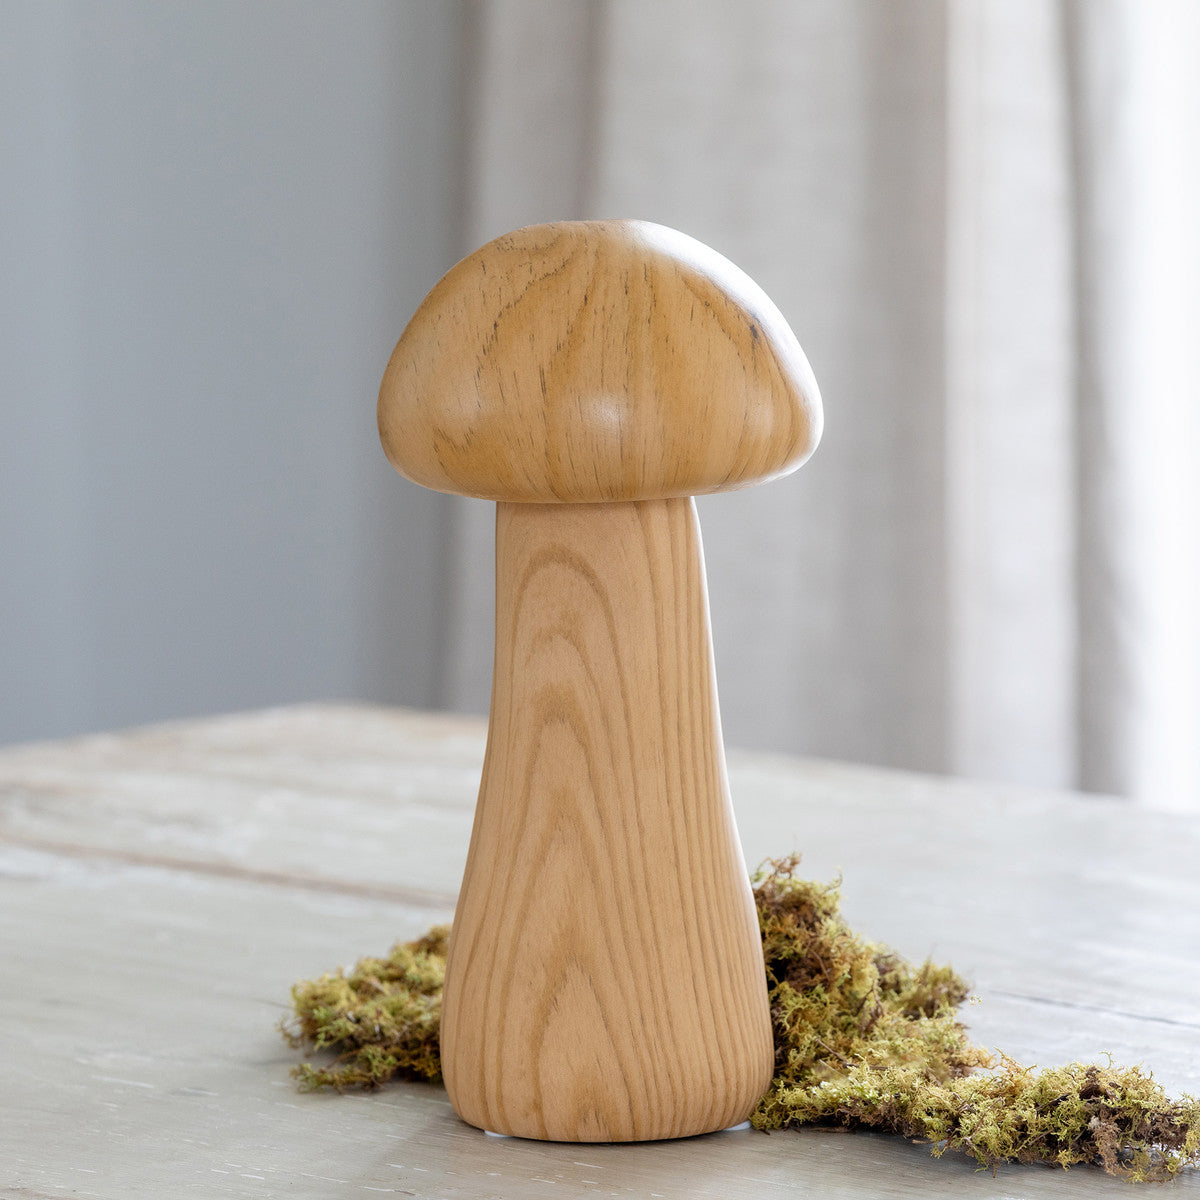 Faux Bois Garden Mushroom - 9.5"